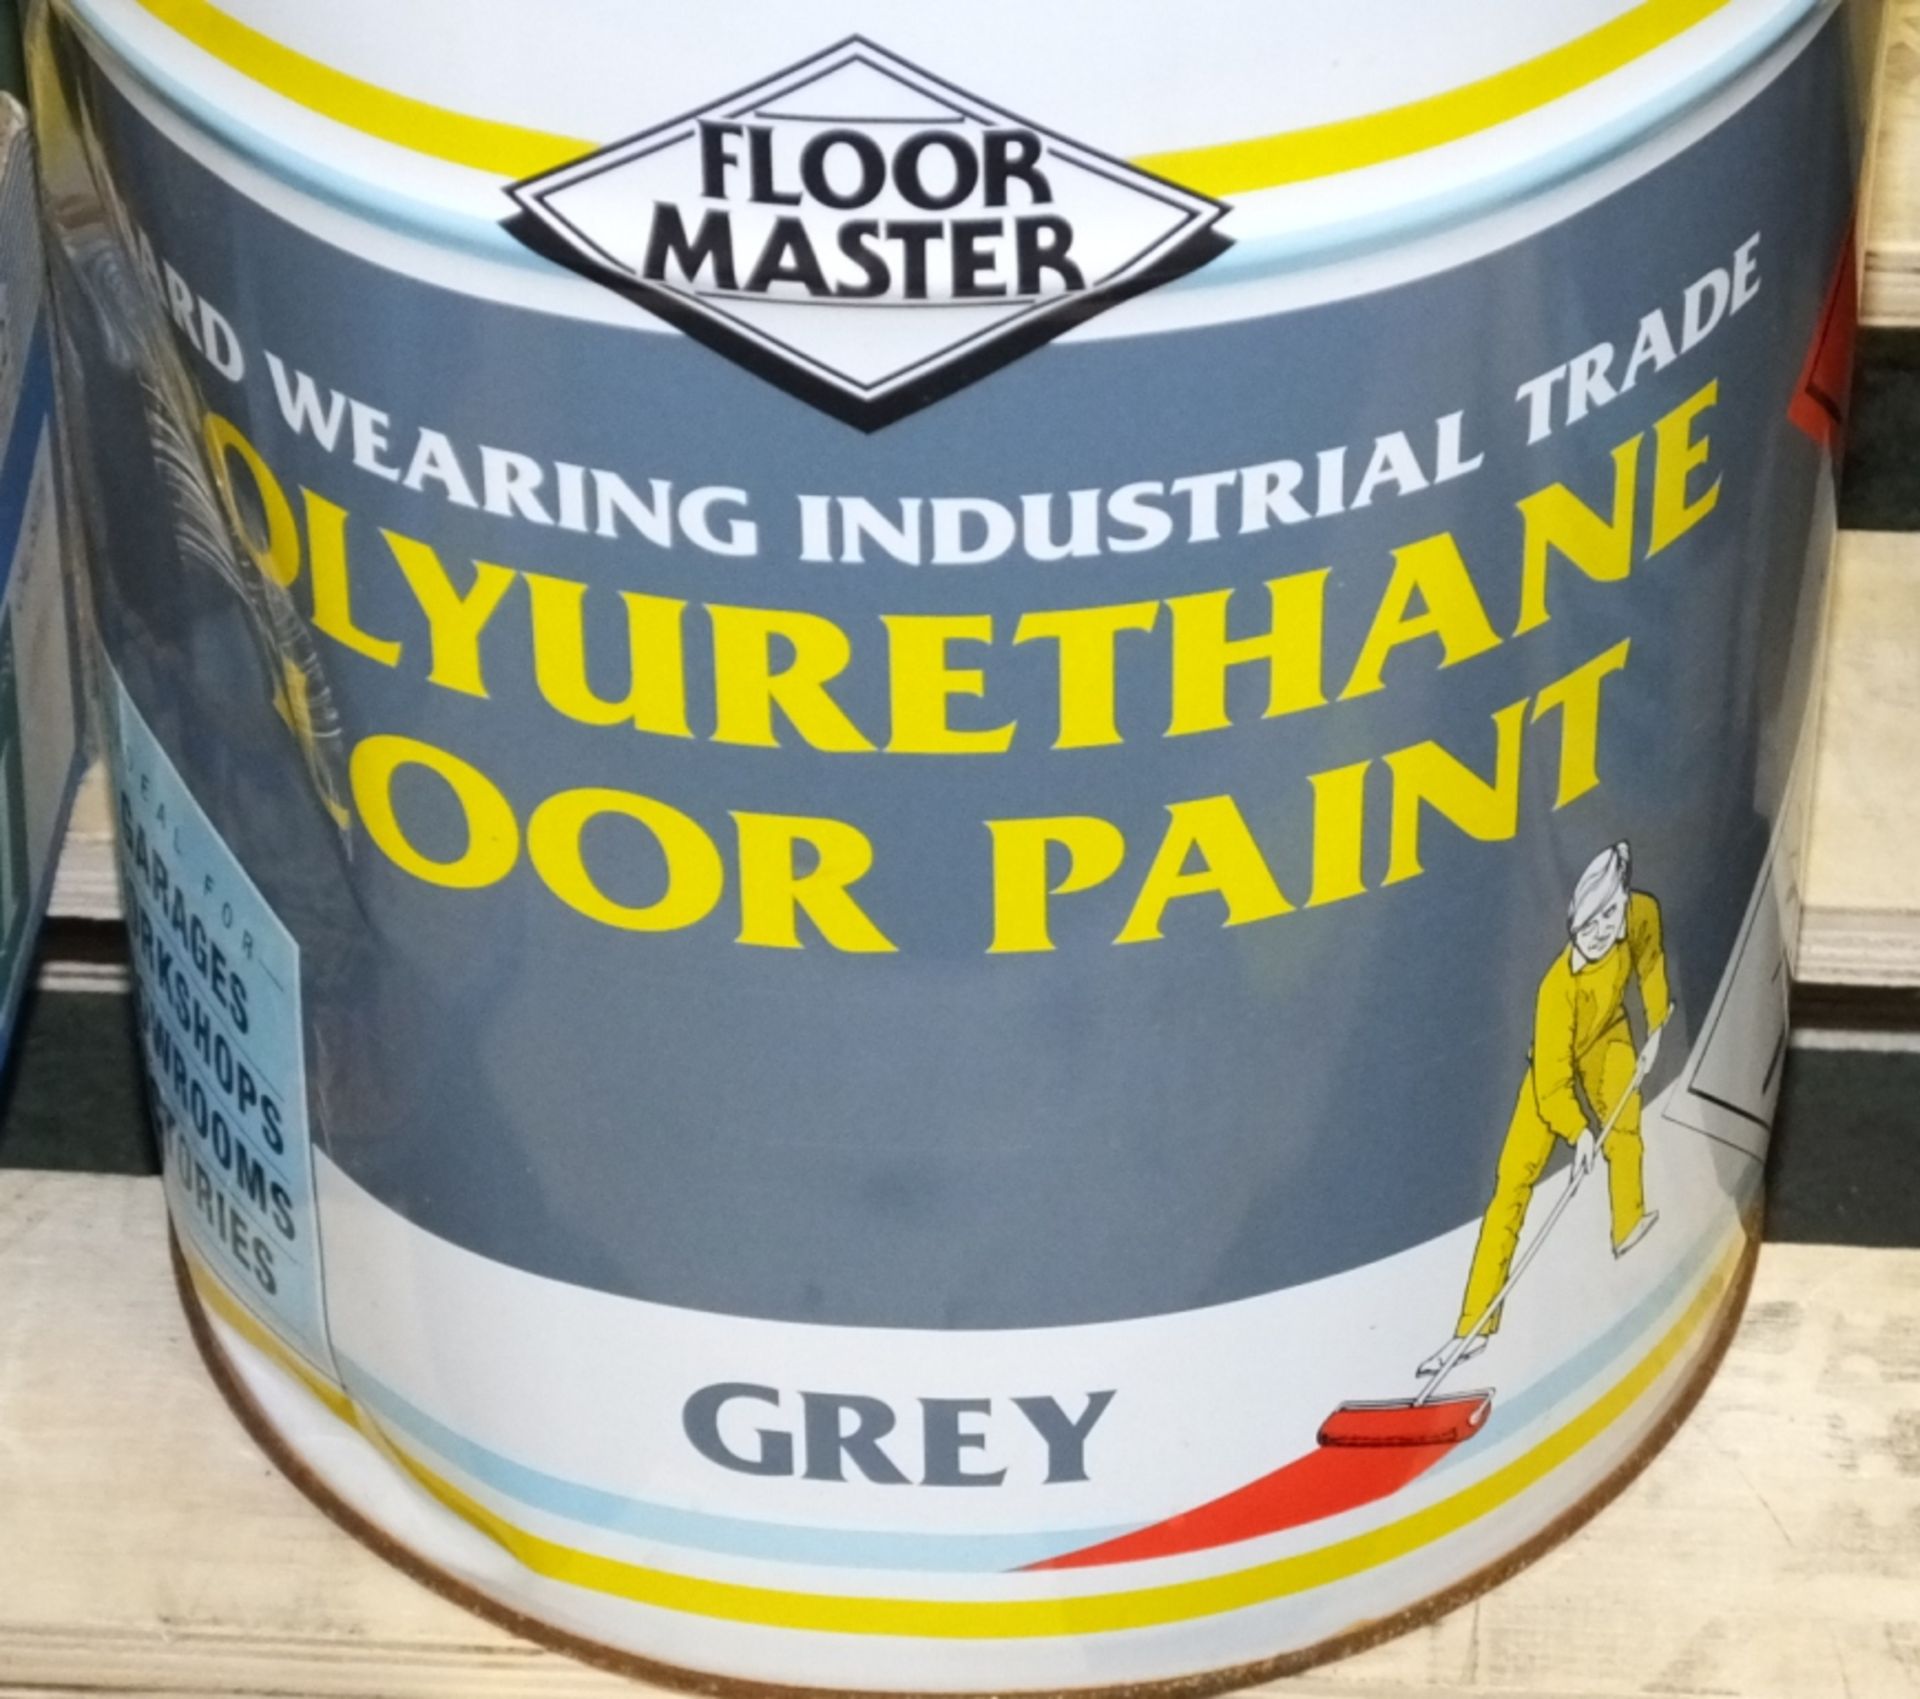 4x 20LTR Floor master Polyurethane Paint - Grey - Image 2 of 2